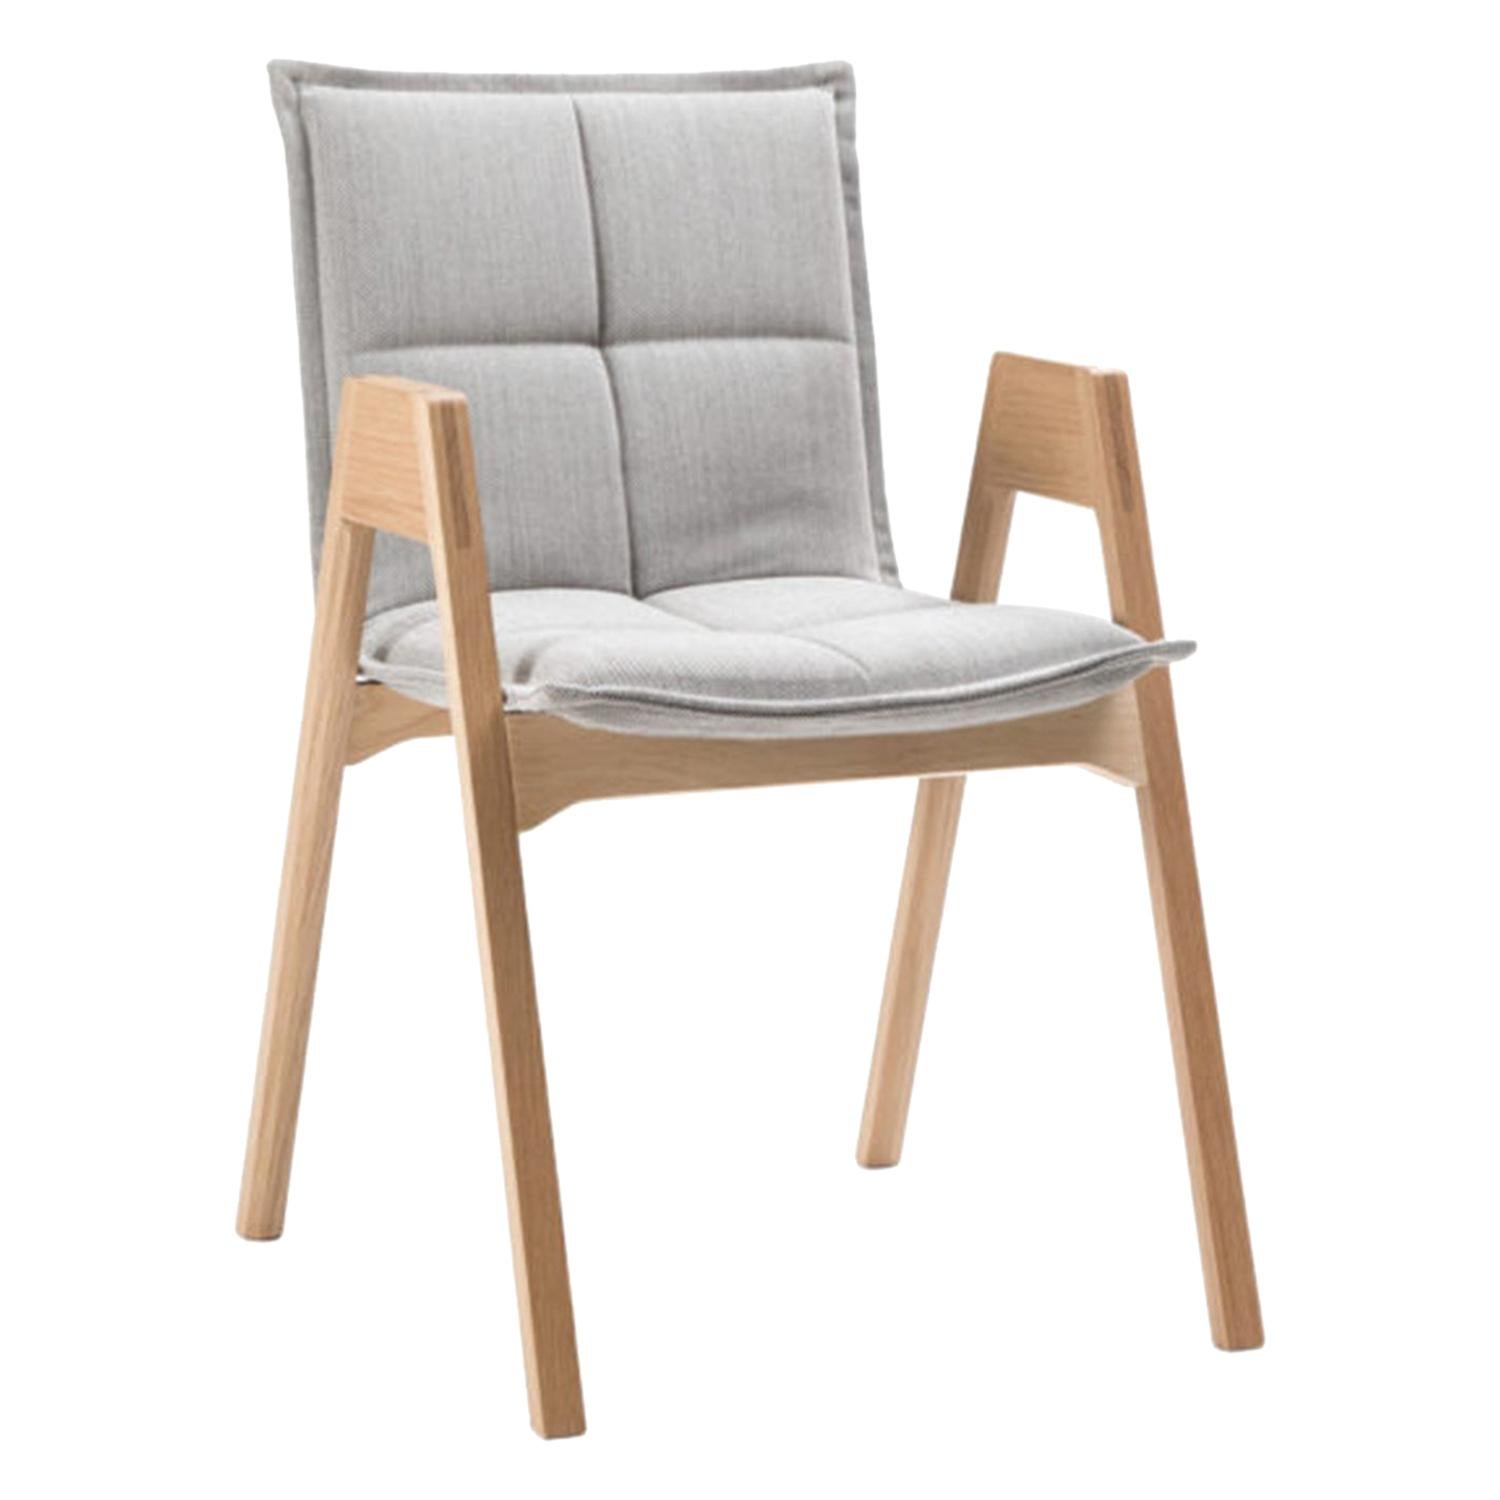 Anpassbarer stapelbarer Inno Lab-Sessel aus Holz von Harri Korhonen